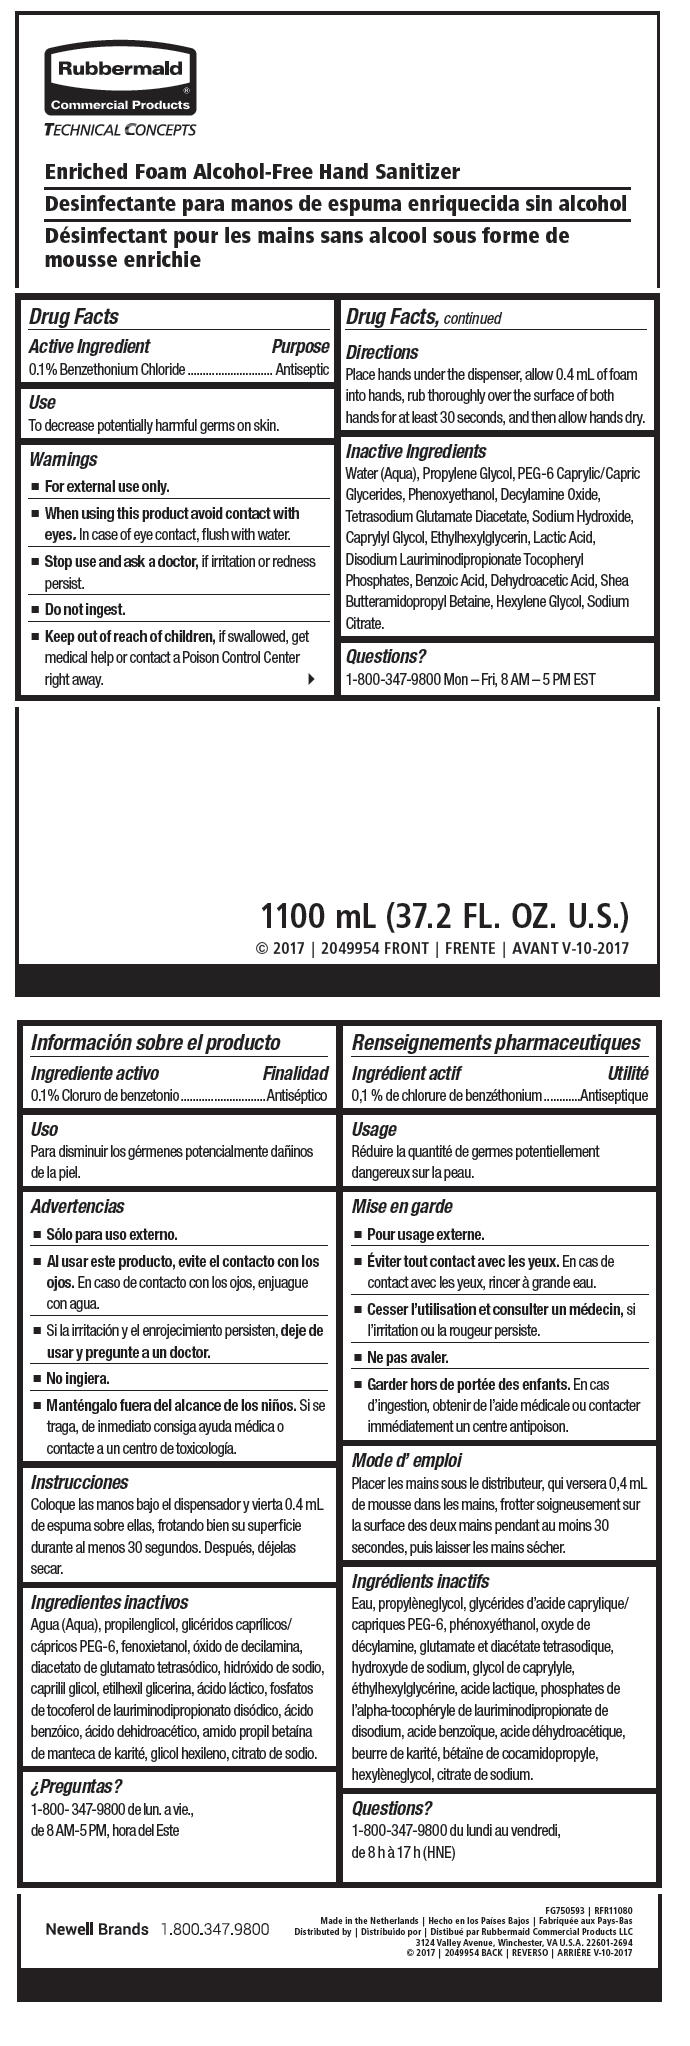 PRINCIPAL DISPLAY PANEL - 1100 mL Bag Label